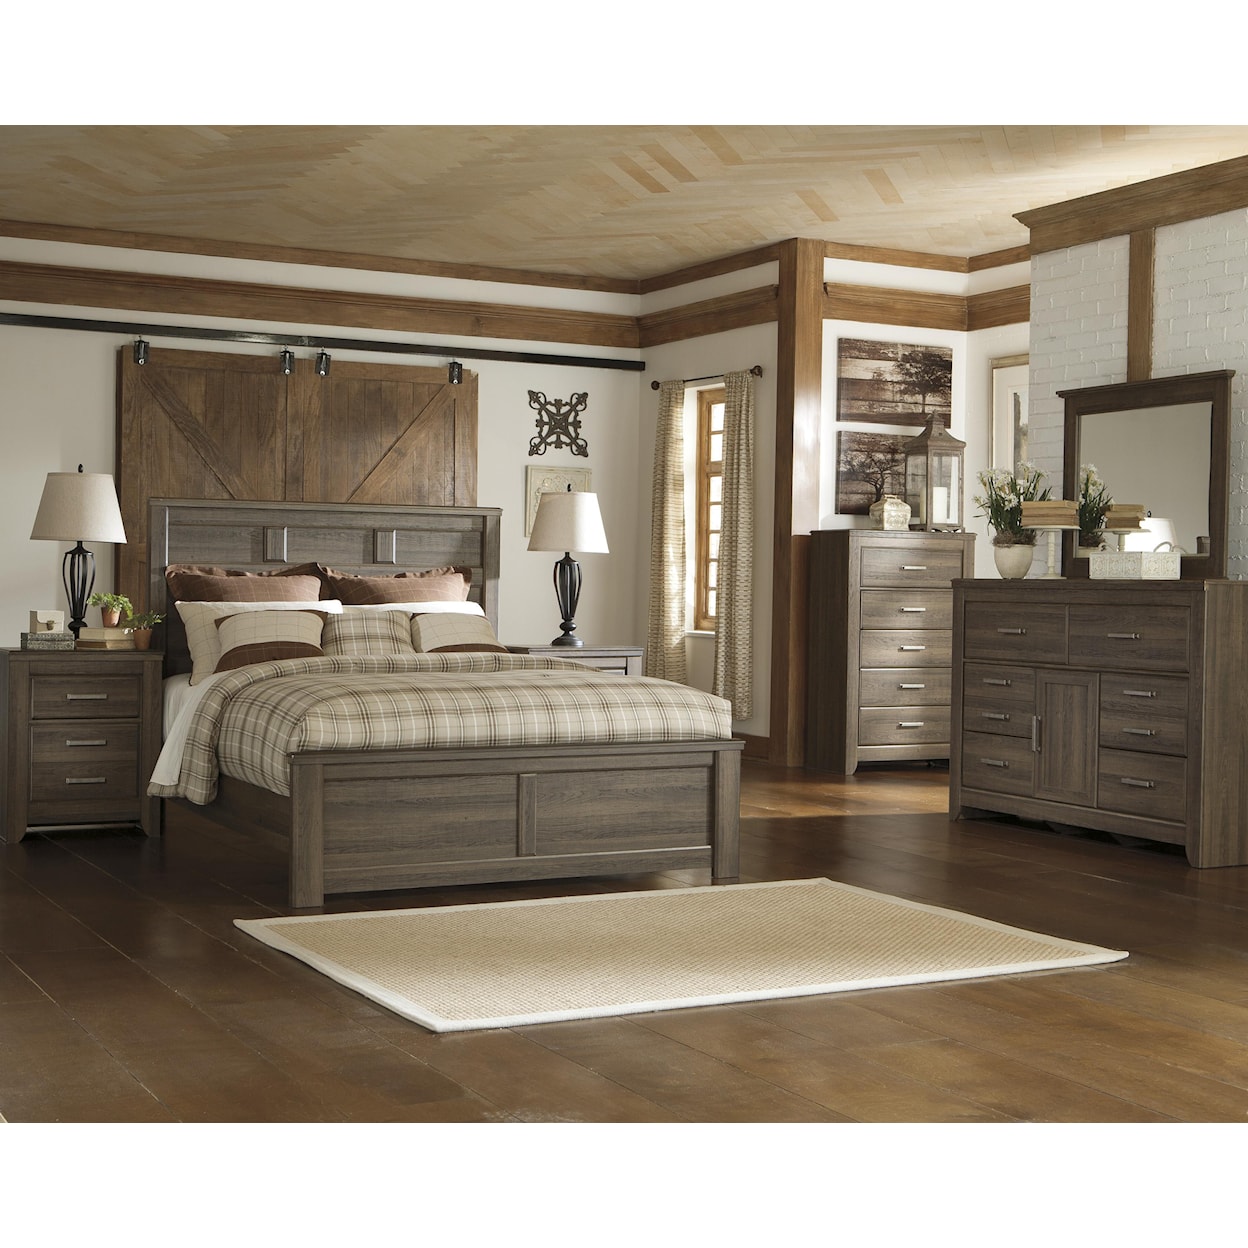 Signature Design by Ashley Furniture Juararo Queen Bedroom Group